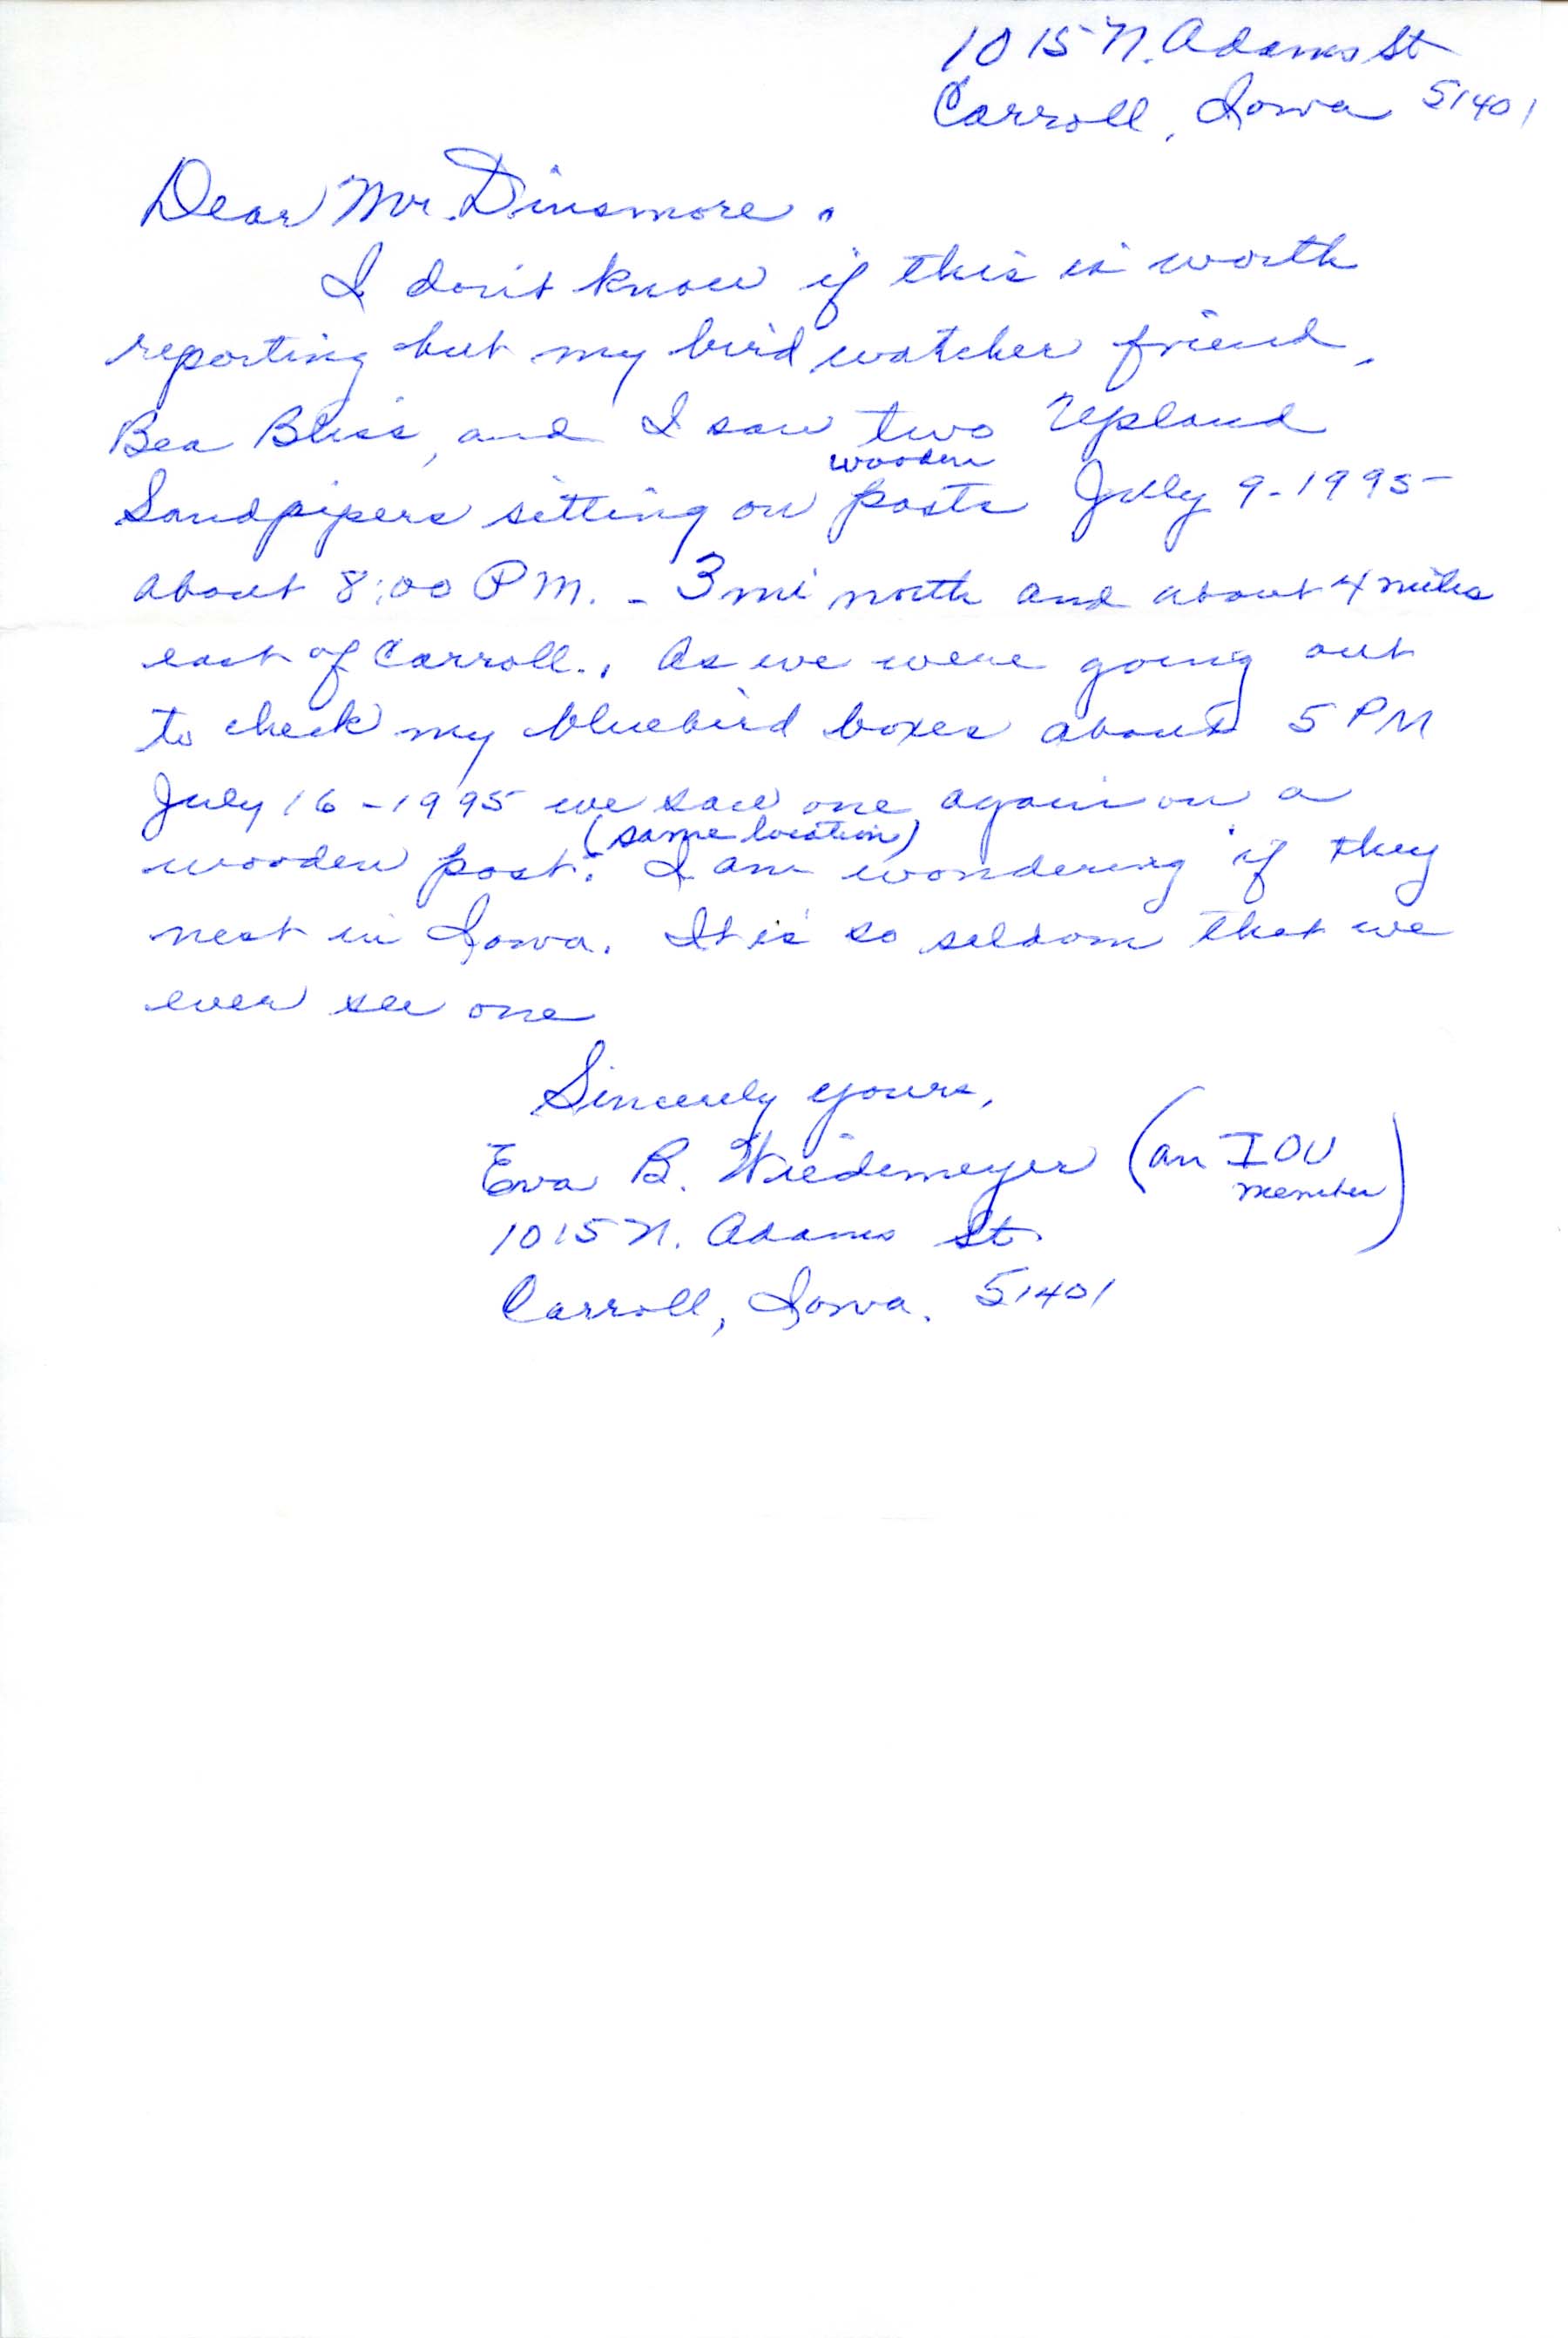 Eva Wiedemeyer letter to Jim Dinsmore regarding Upland Sandpiper sighting, summer 1995